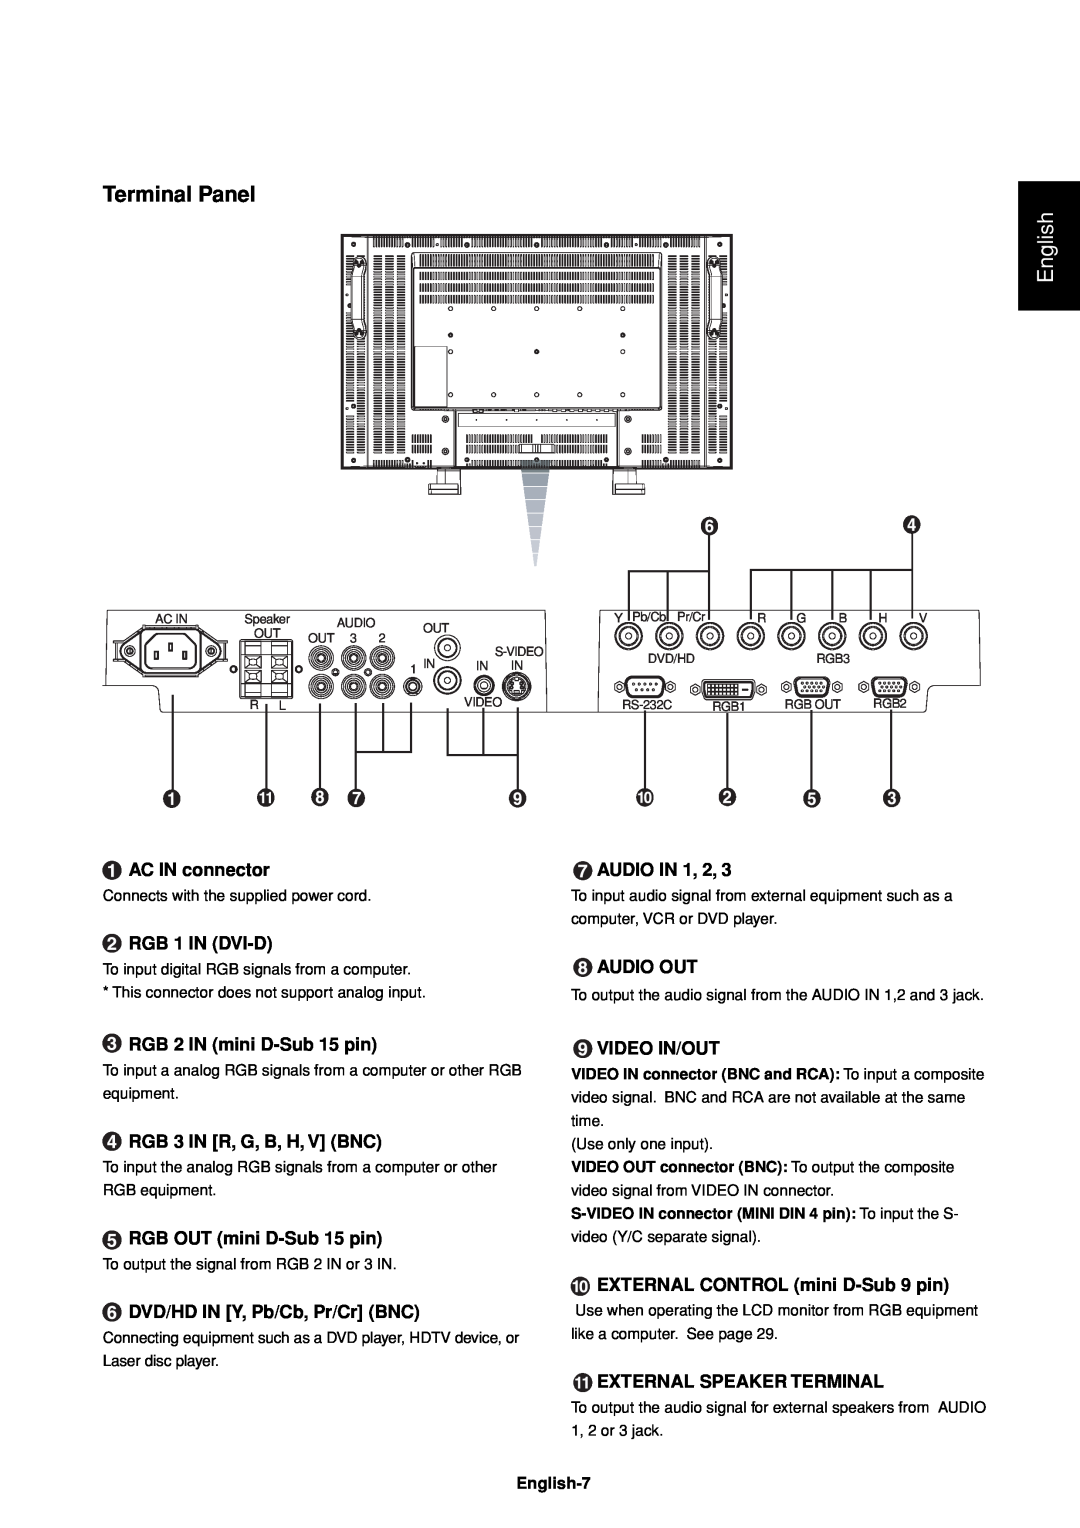 Mitsubishi Electronics LDT37IV (BH544), LDT32IV (BH548) manual Terminal Panel, English 